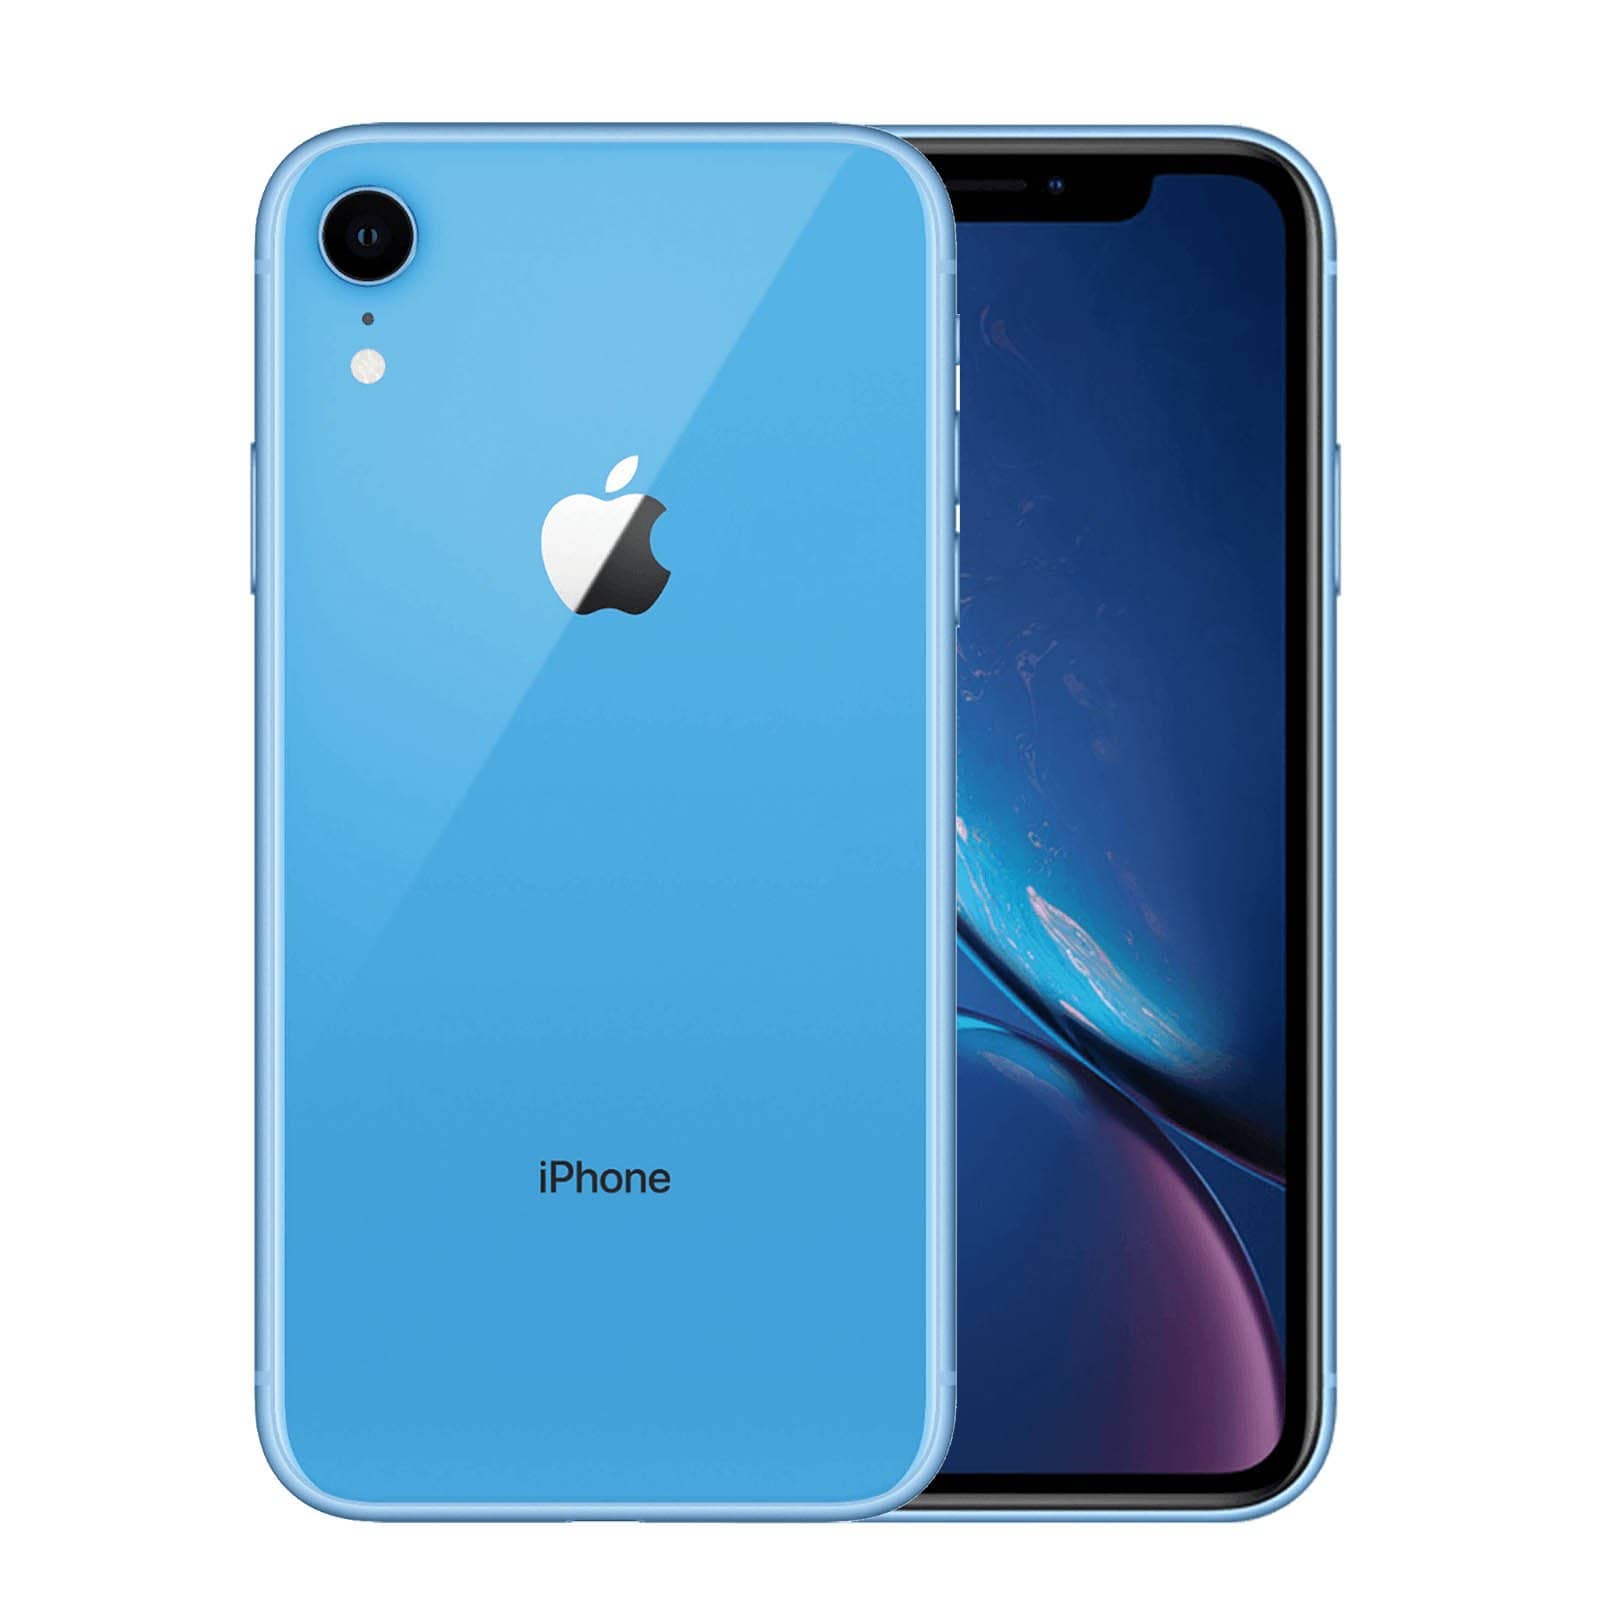 Apple iPhone XR 128GB Blue Very Good - Unlocked 128GB Blue Very Good